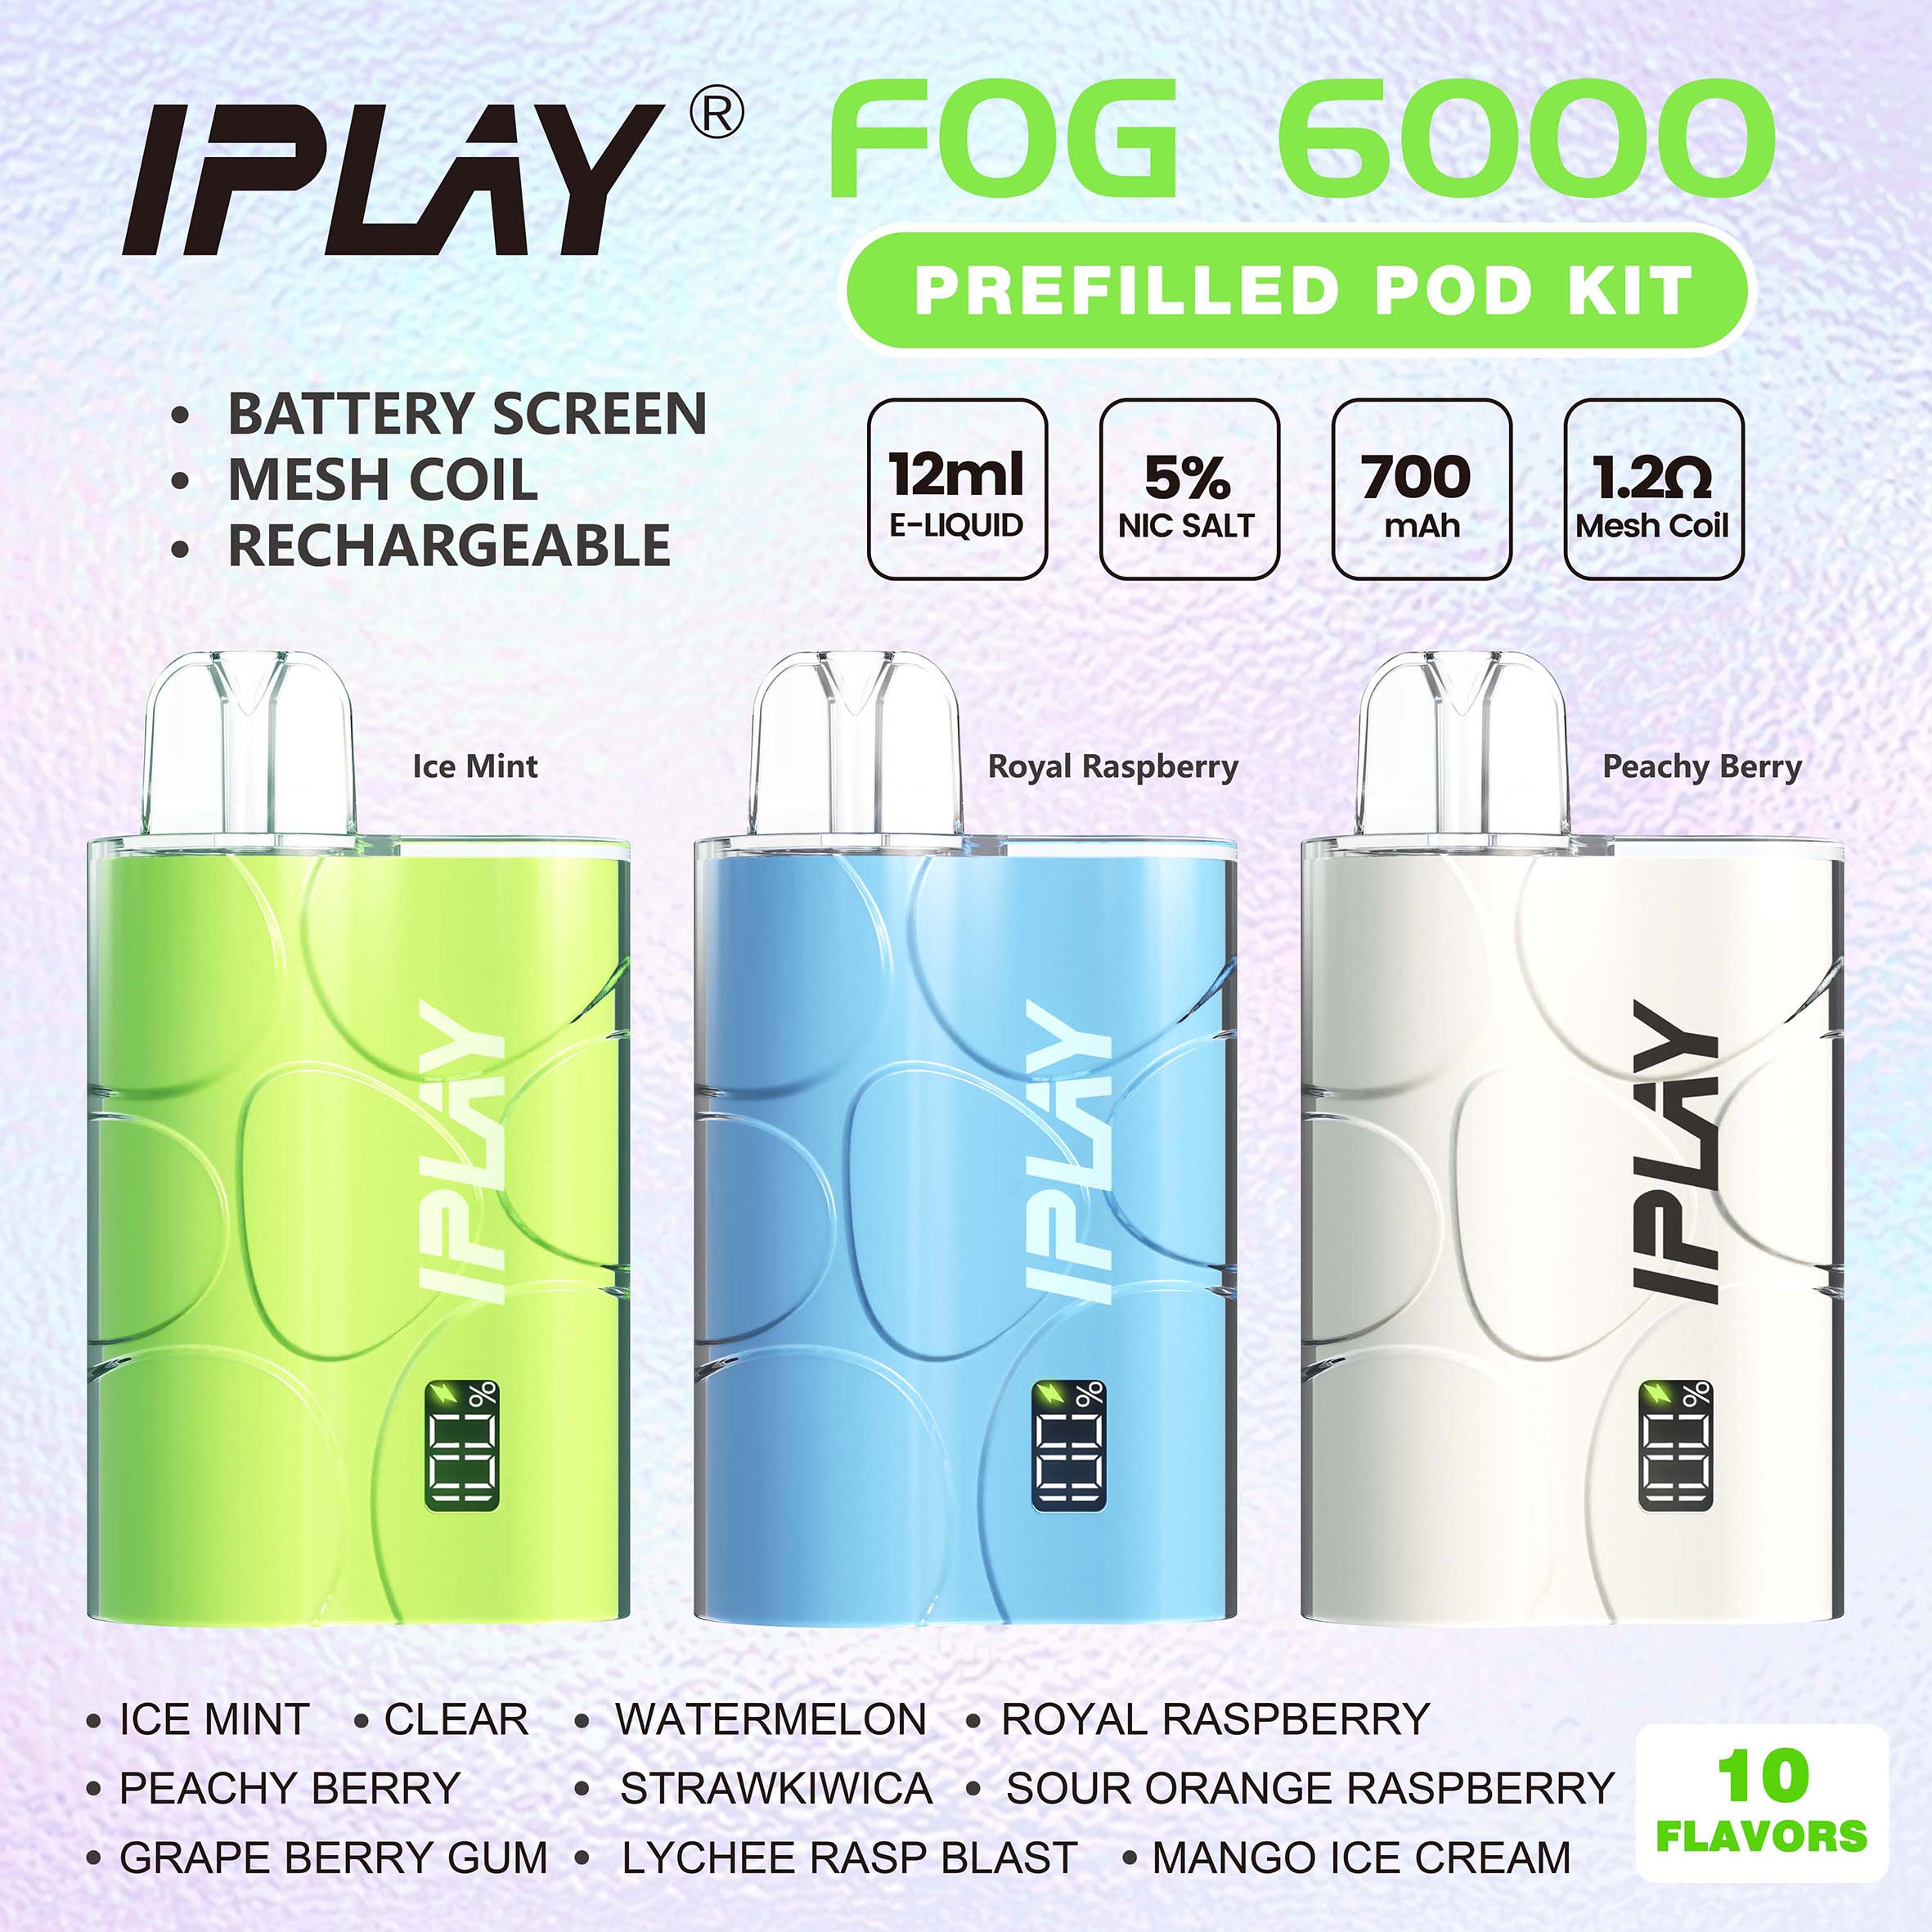 IPLAY FOG 6000 Puffs Pre-filled Vape Pod Kit Featured Image